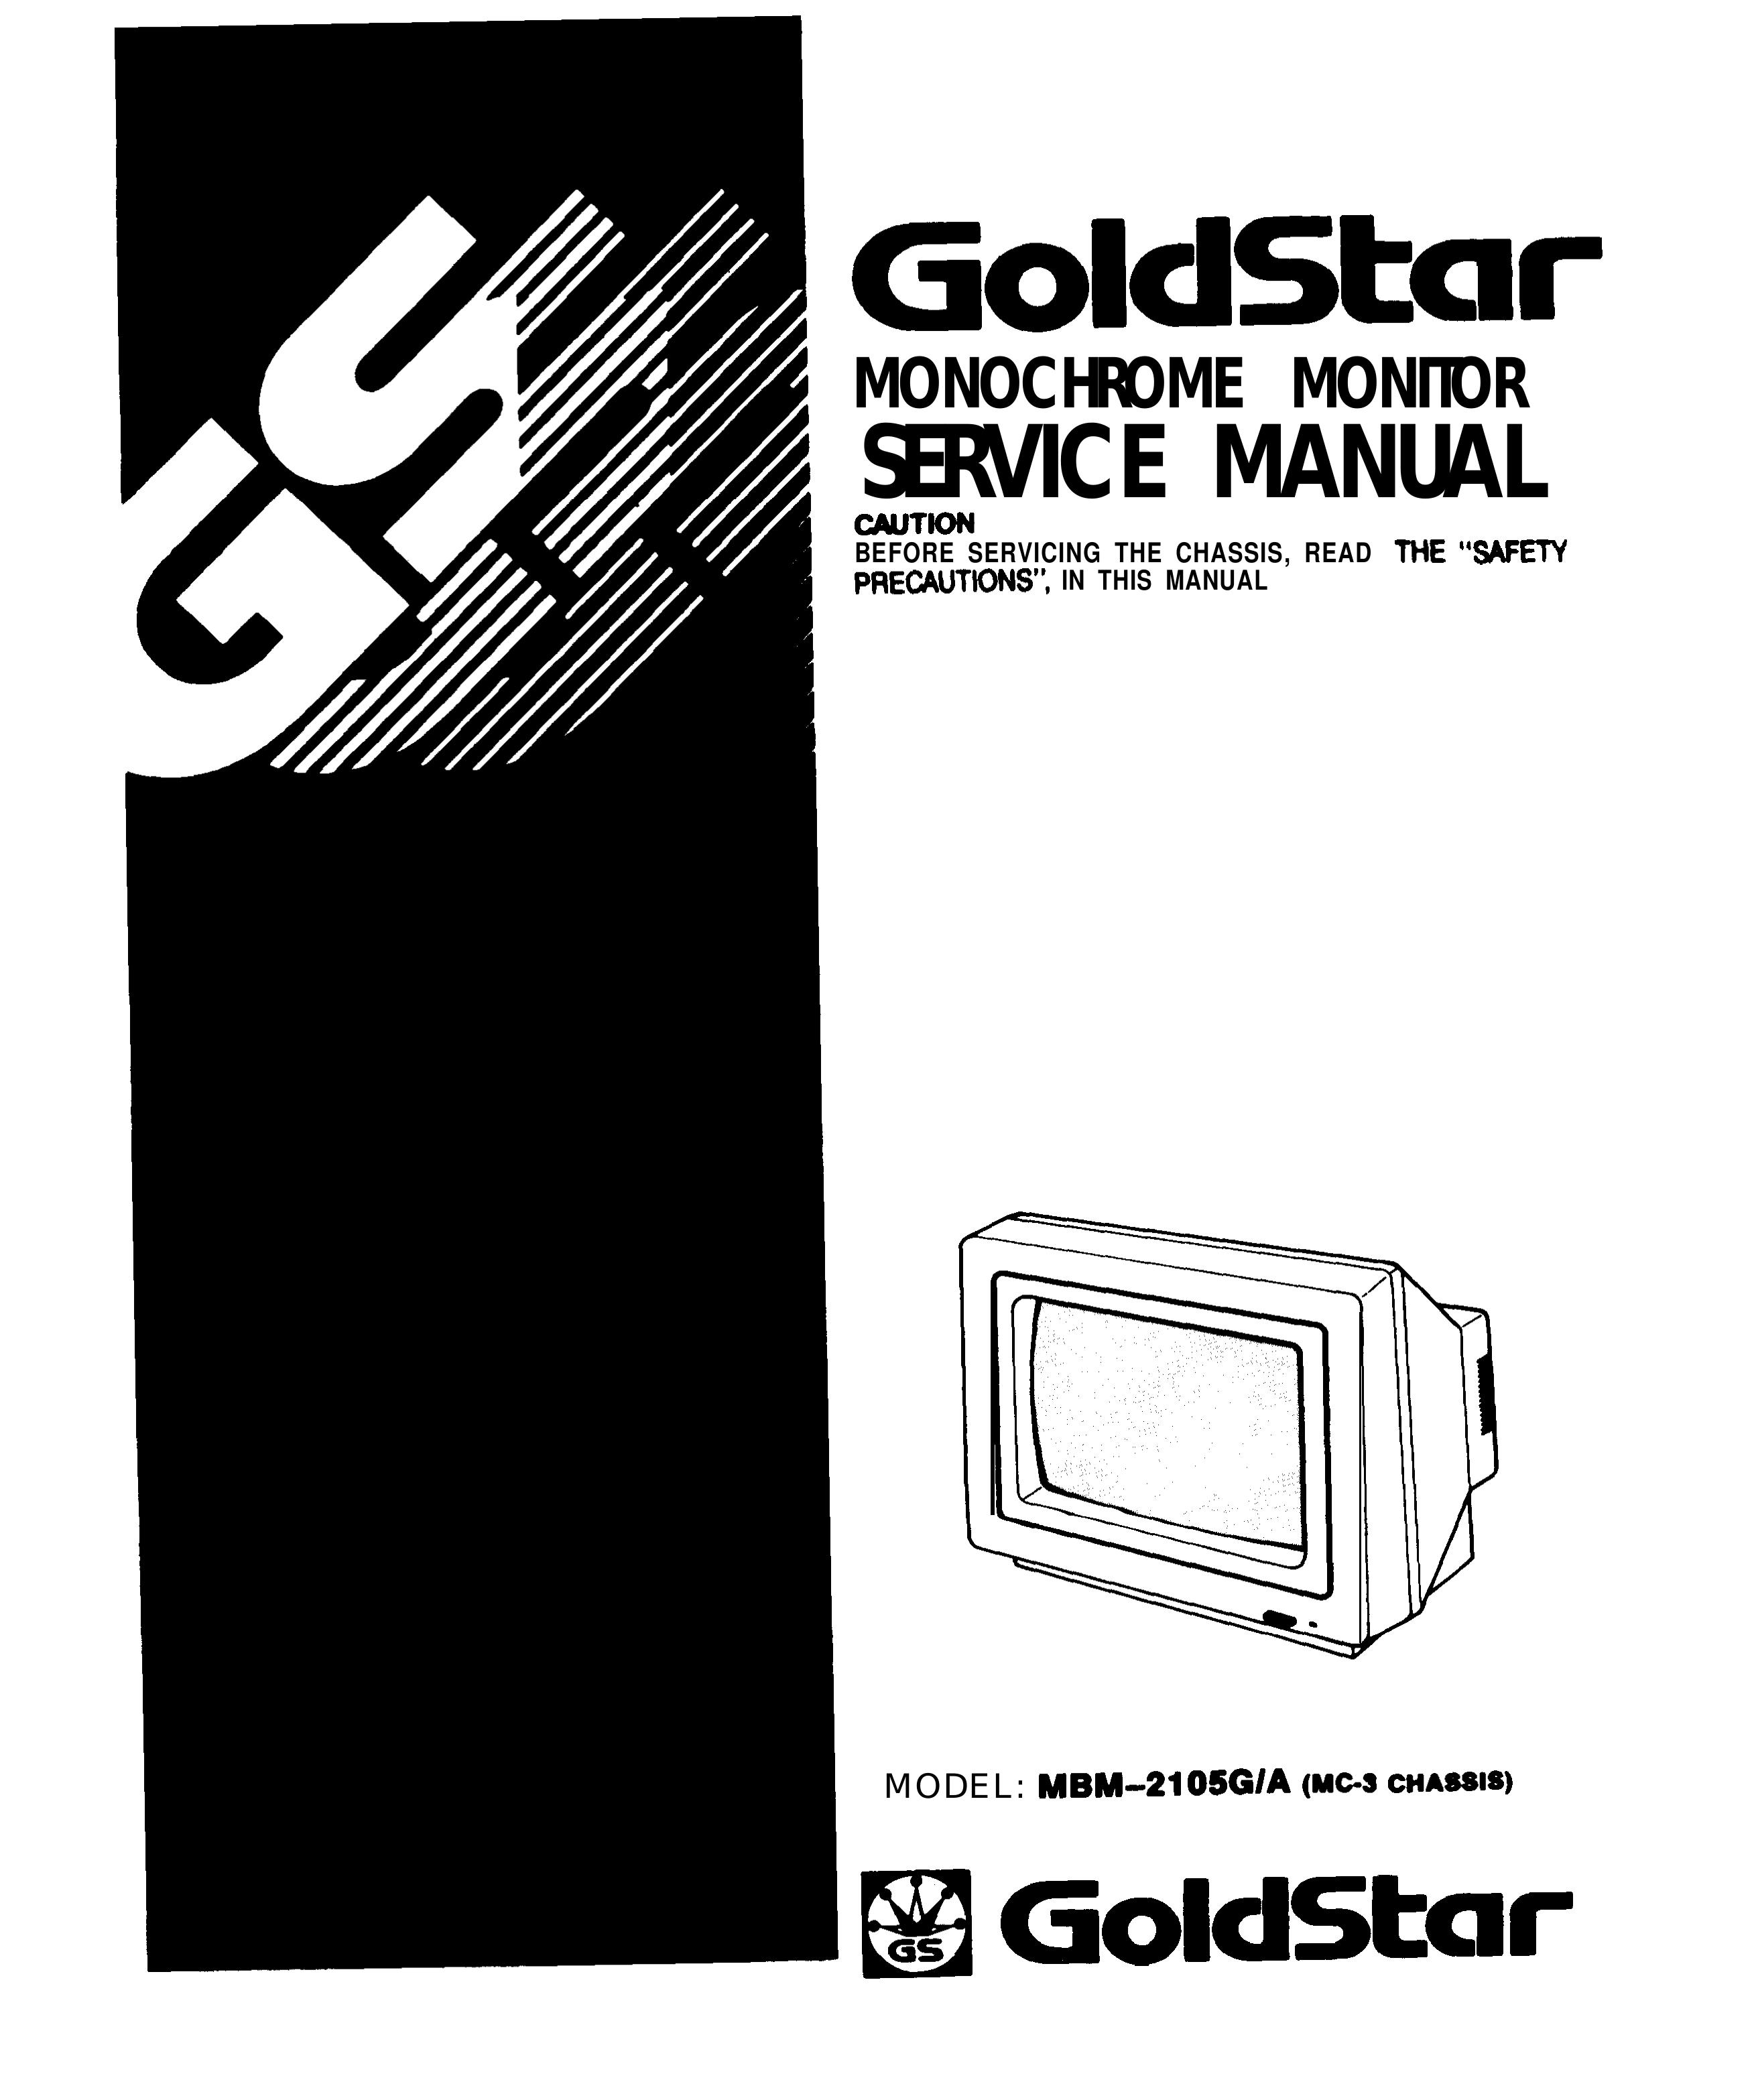 Goldstar MBM-2105GIA Refrigerator User Manual